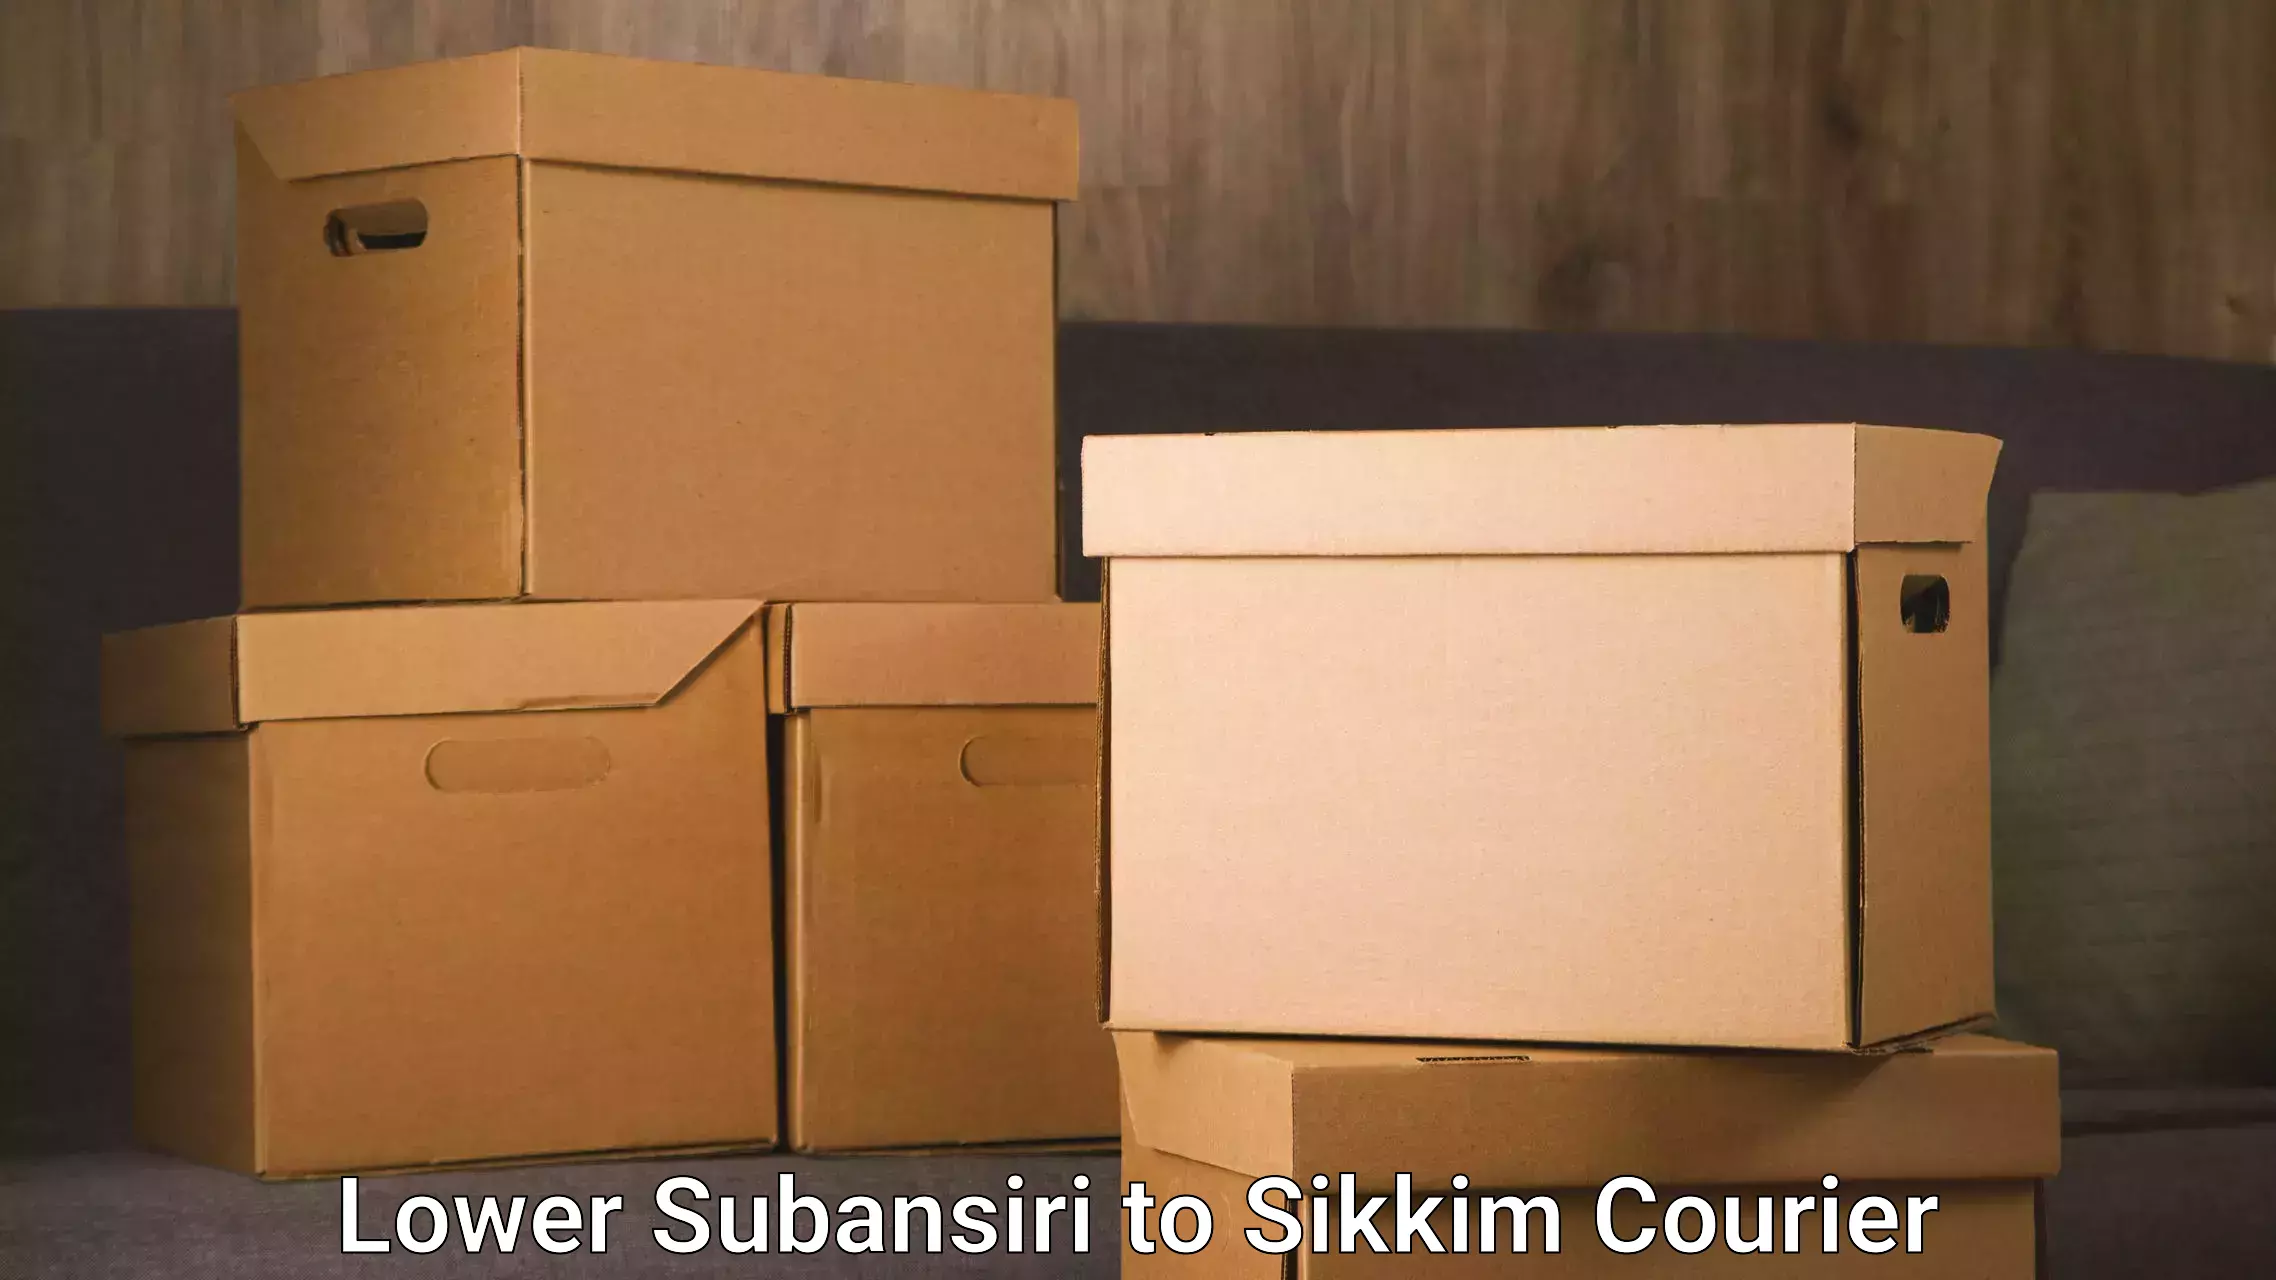 Digital courier platforms Lower Subansiri to South Sikkim